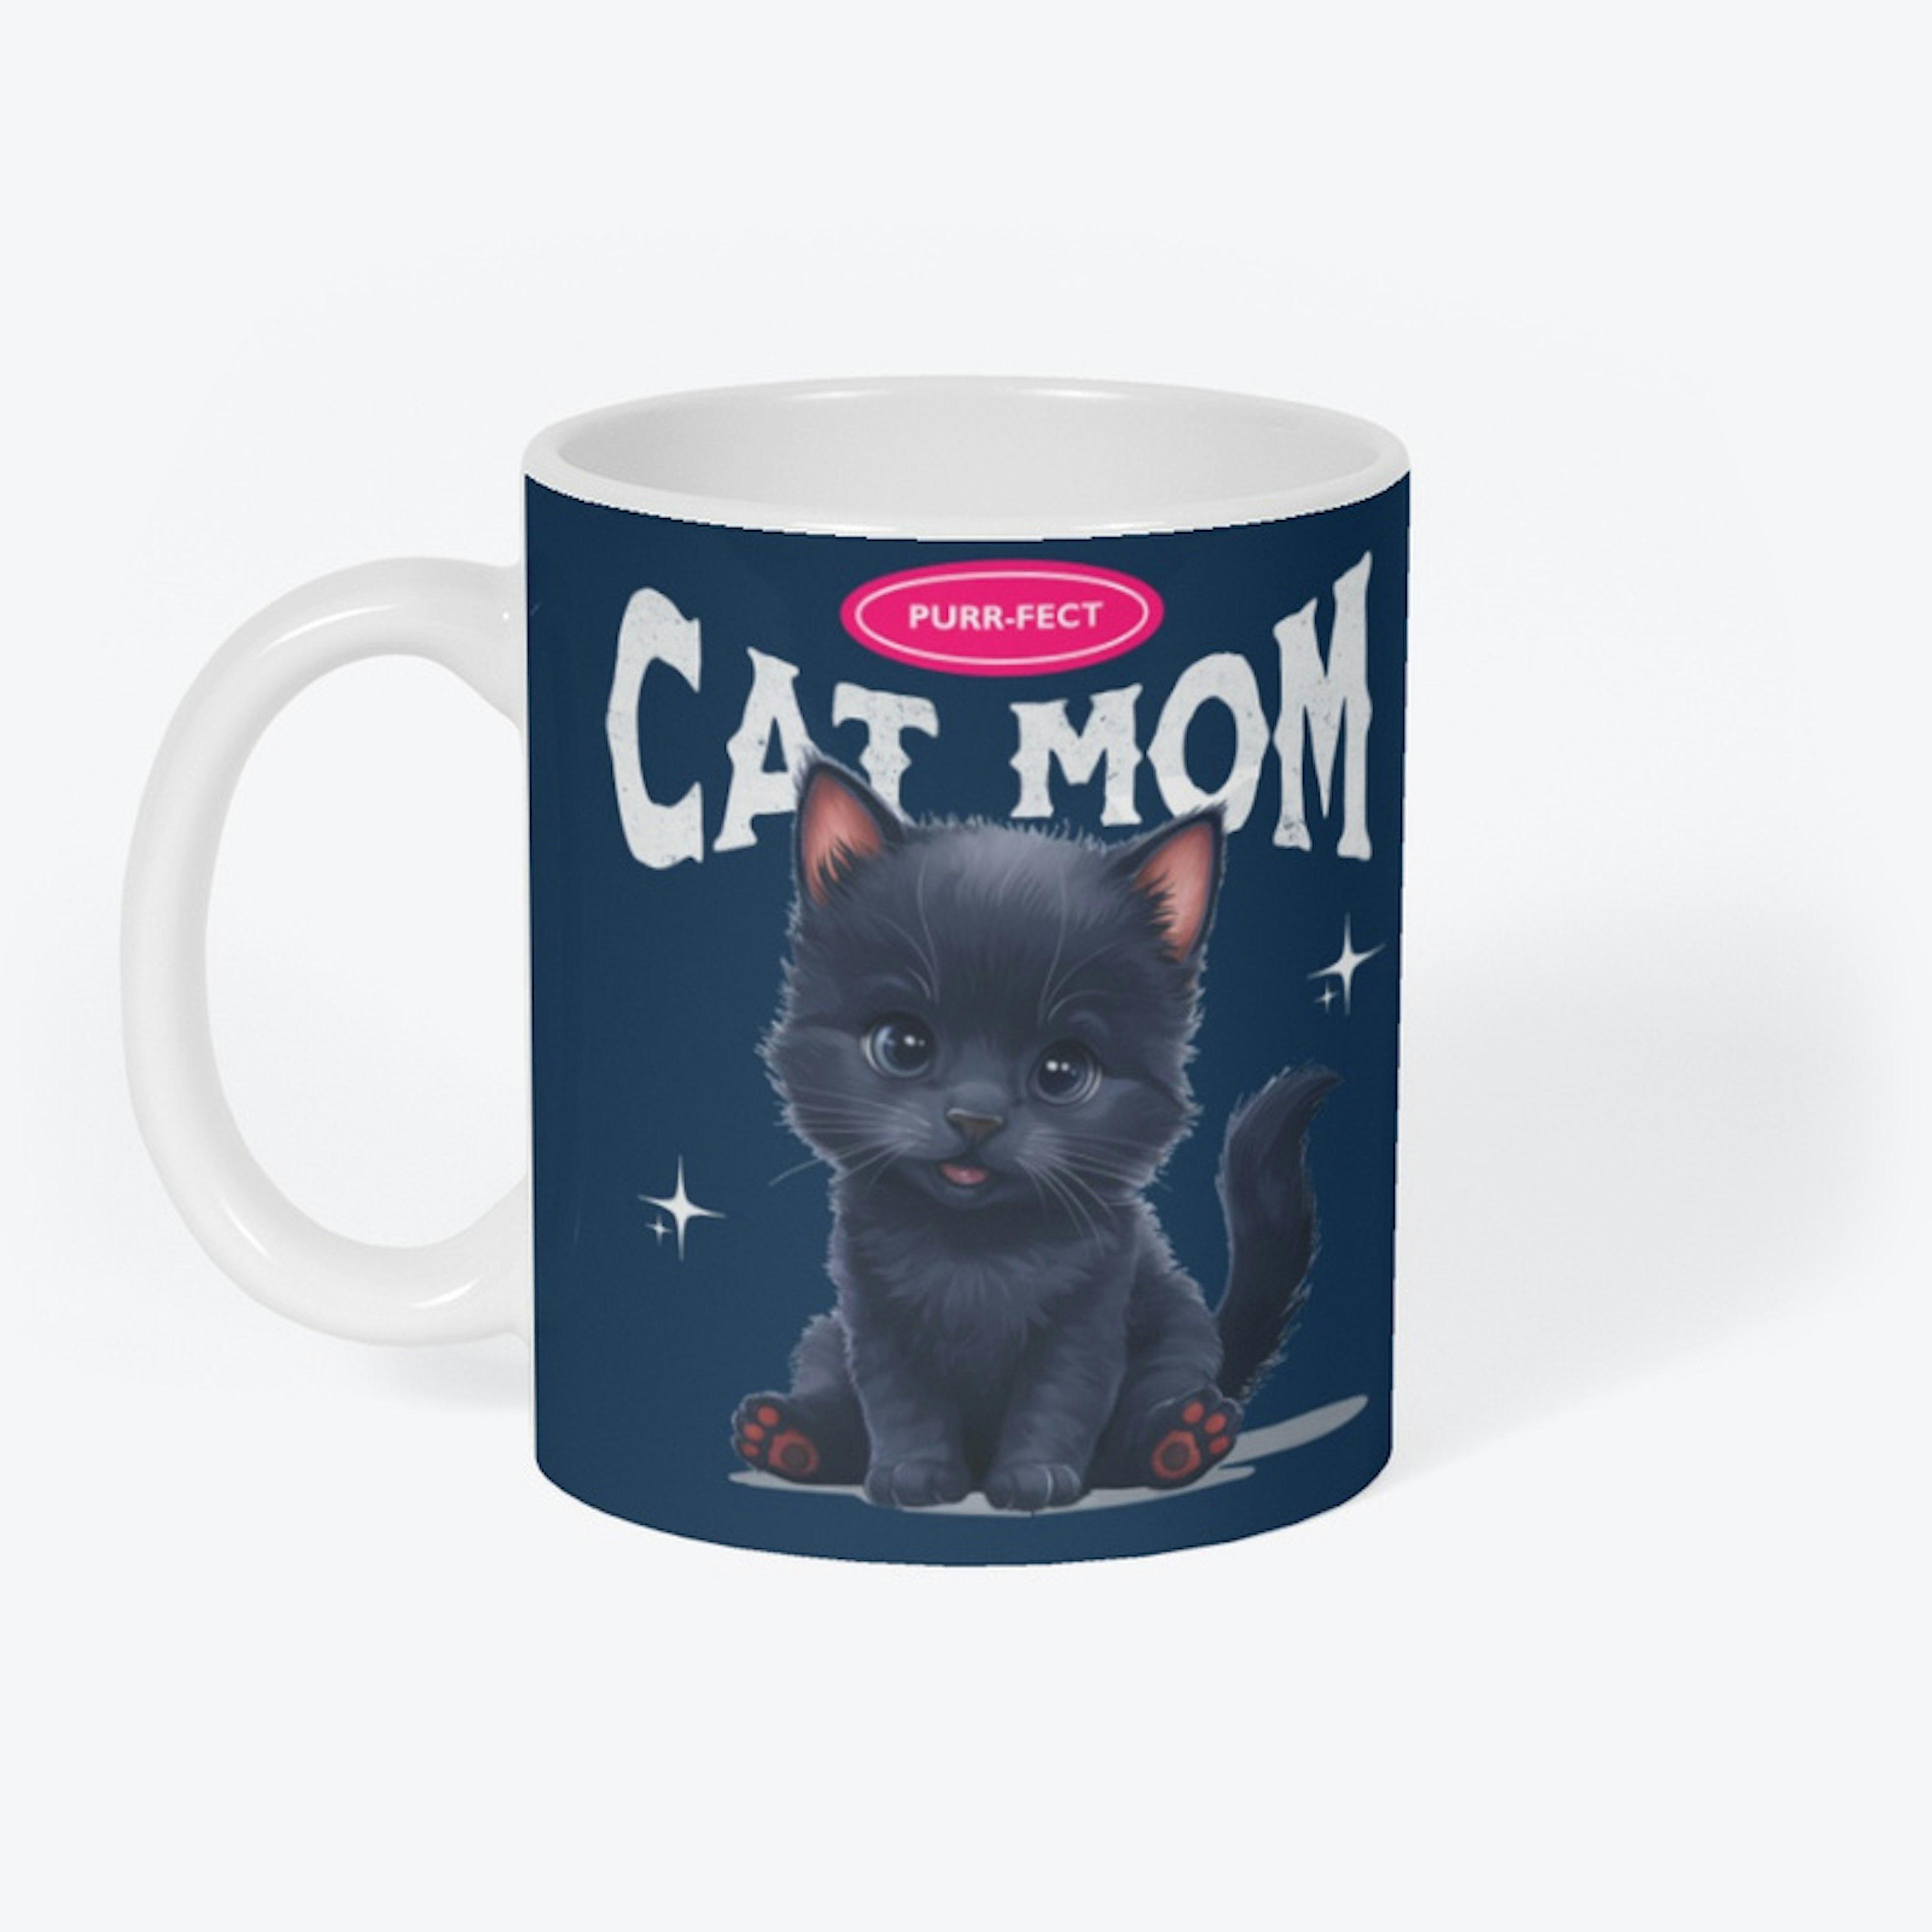 Purr-fect Cat Mom